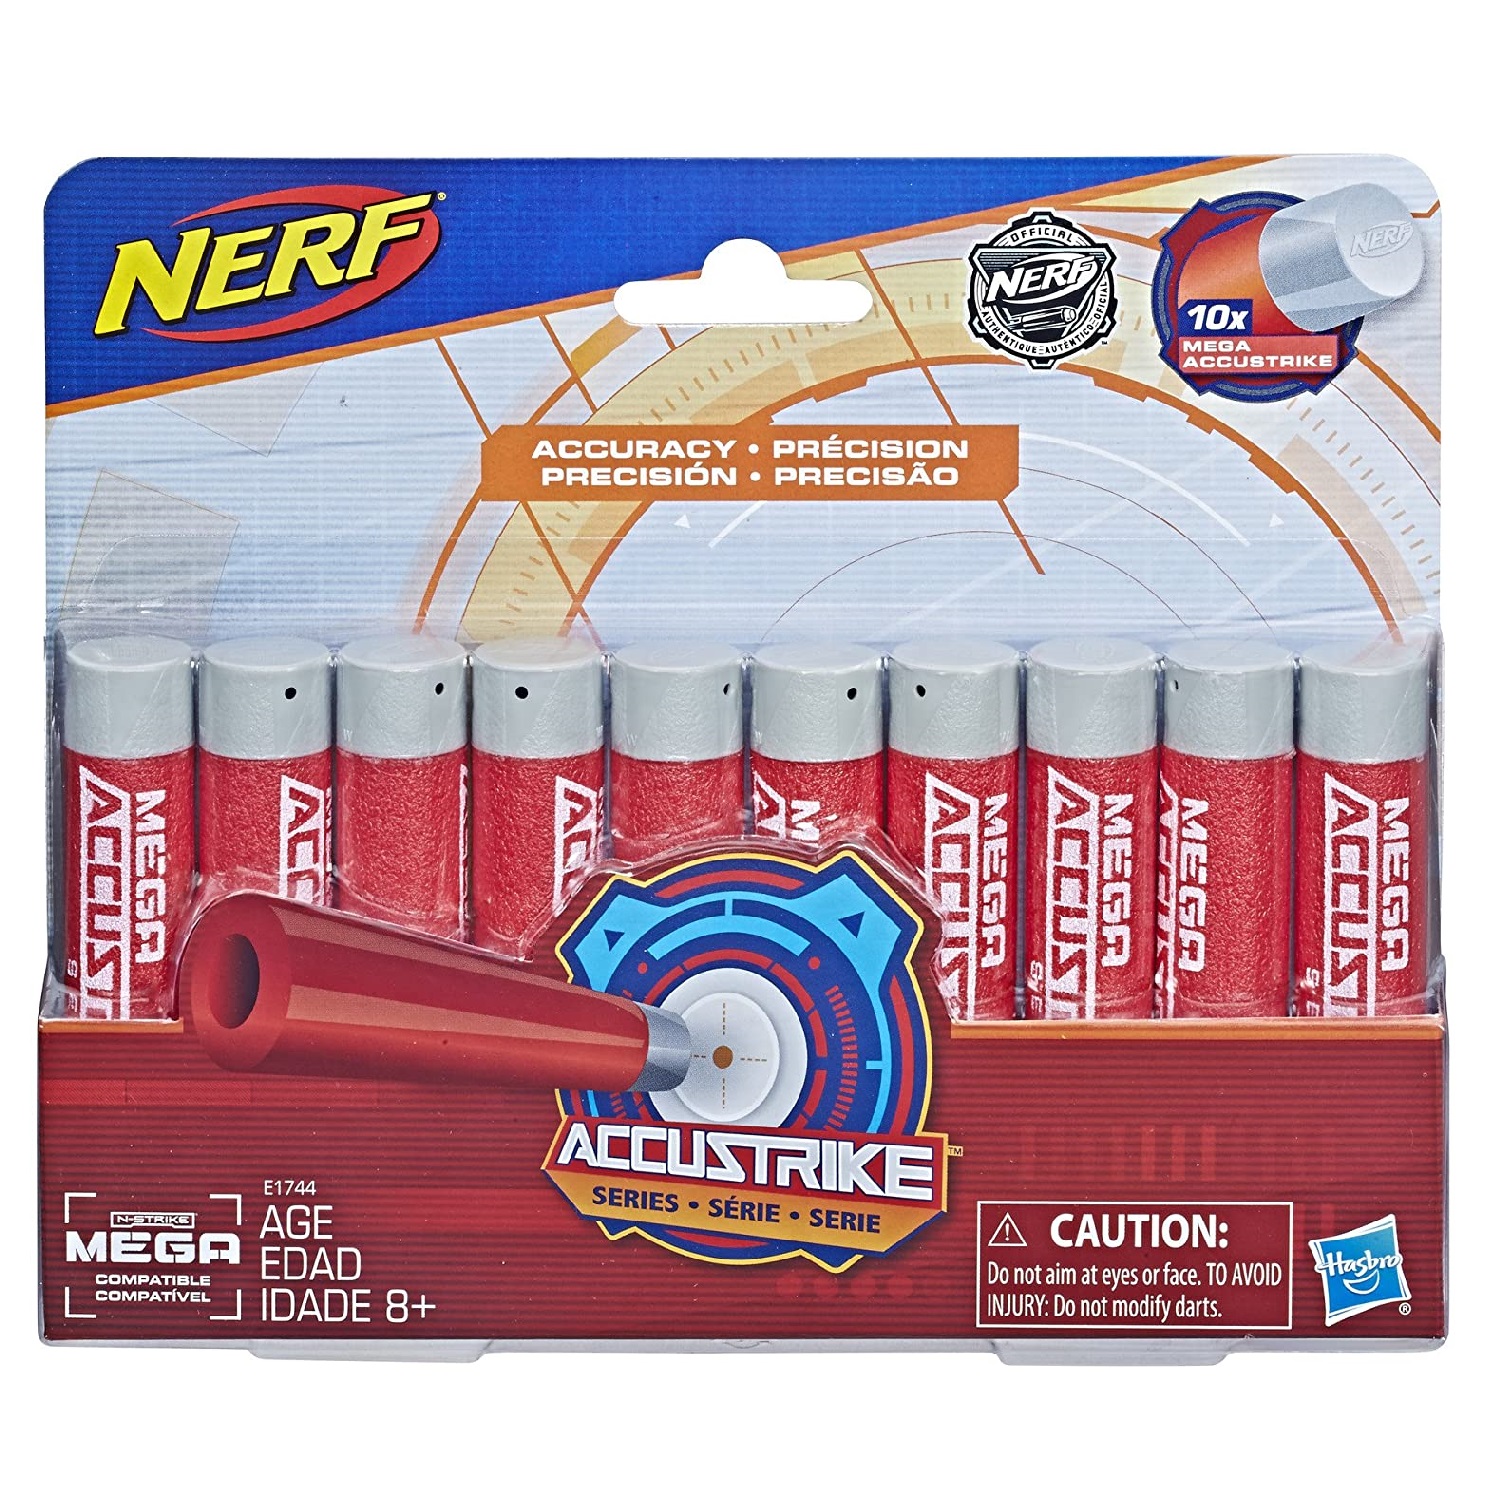 Accustrike Refill - 10 darts - Blaster-Time